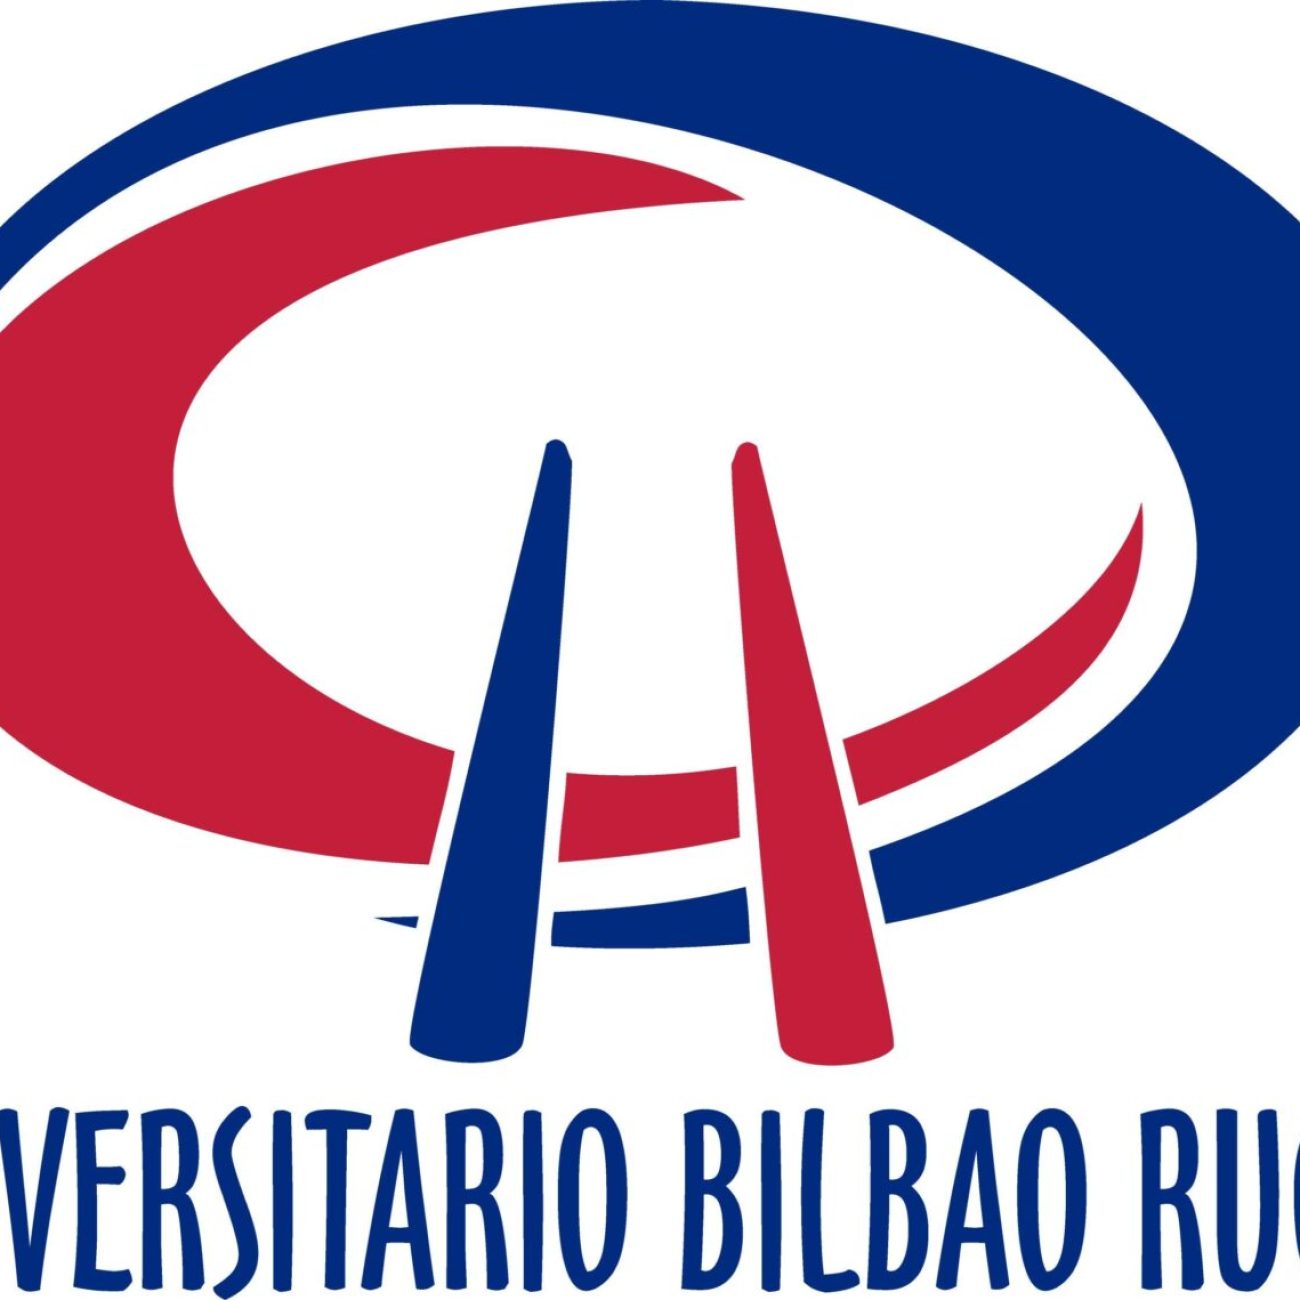 Universitario Bilbao Rugby